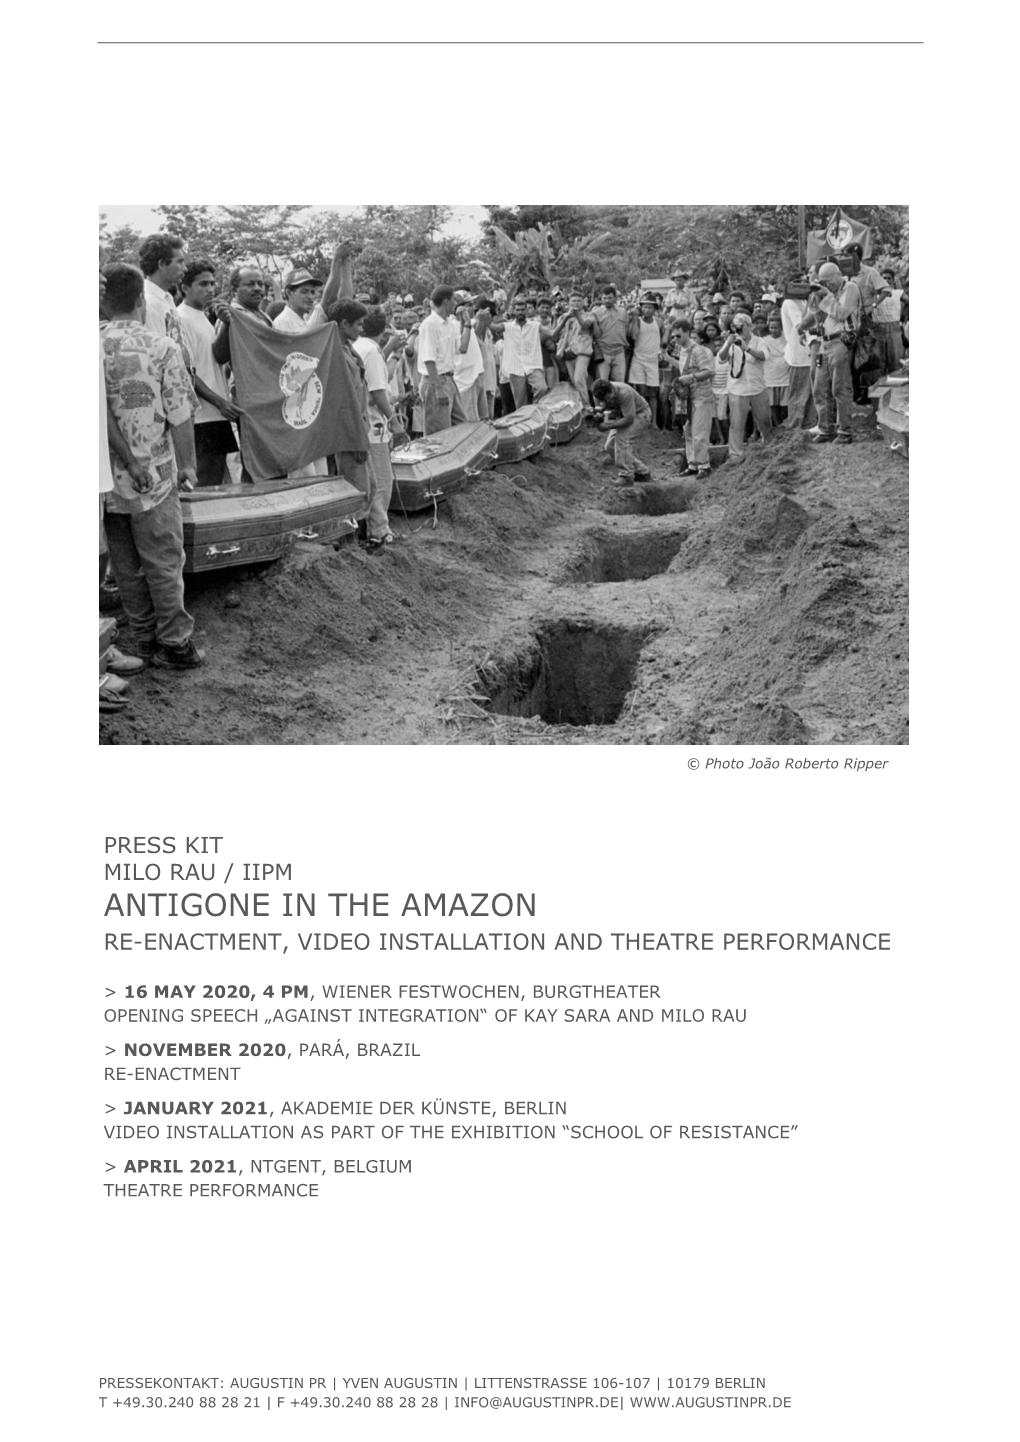 Press Kit Milo Rau / Iipm Antigone in the Amazon Re-Enactment, Video Installation and Theatre Performance